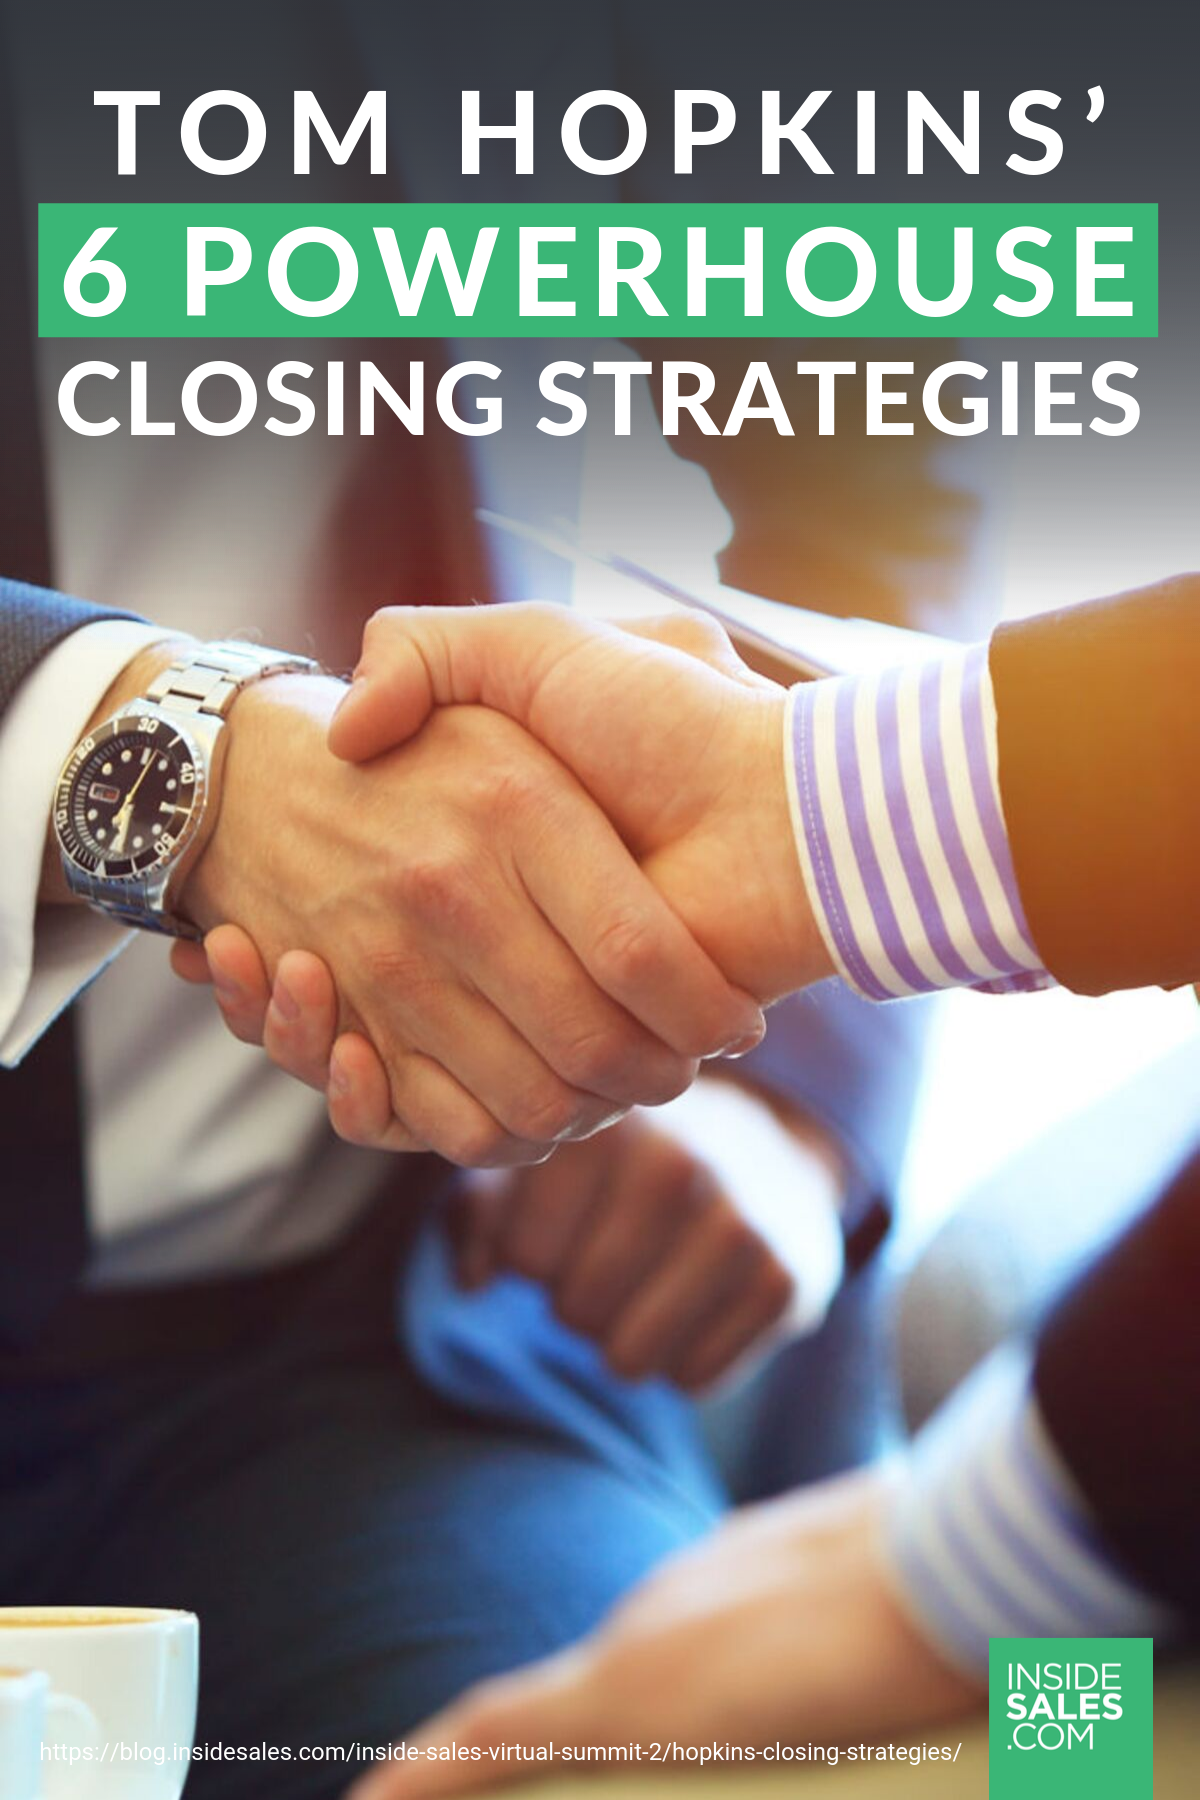 Tom Hopkins’ 6 Powerhouse Closing Strategies https://resources.insidesales.com/blog/inside-sales-virtual-summit-2/hopkins-closing-strategies/